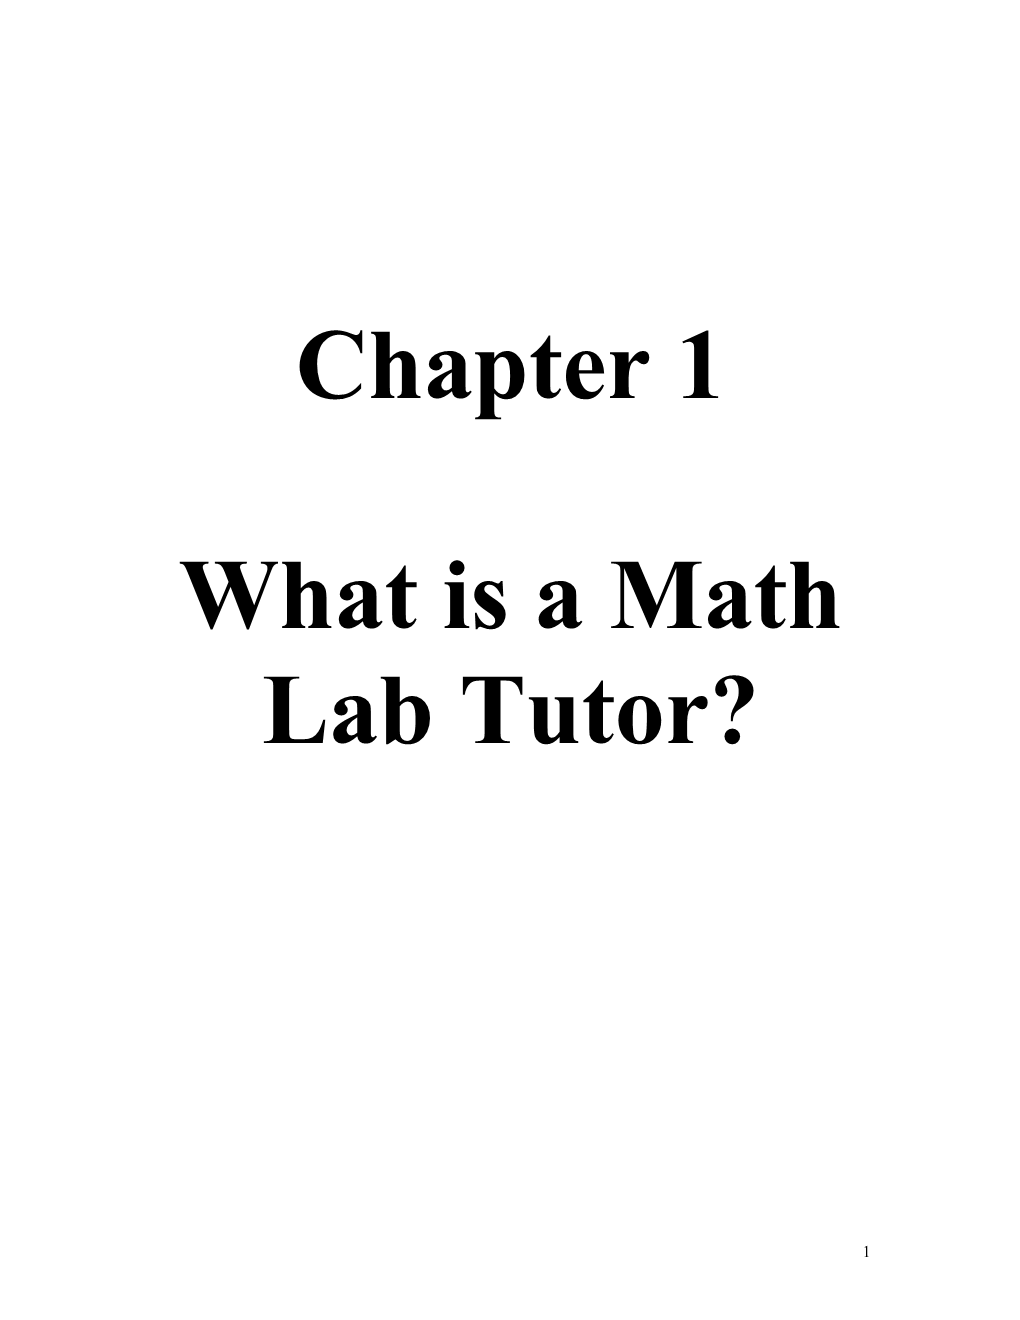 What Is a Math Lab Tutor?